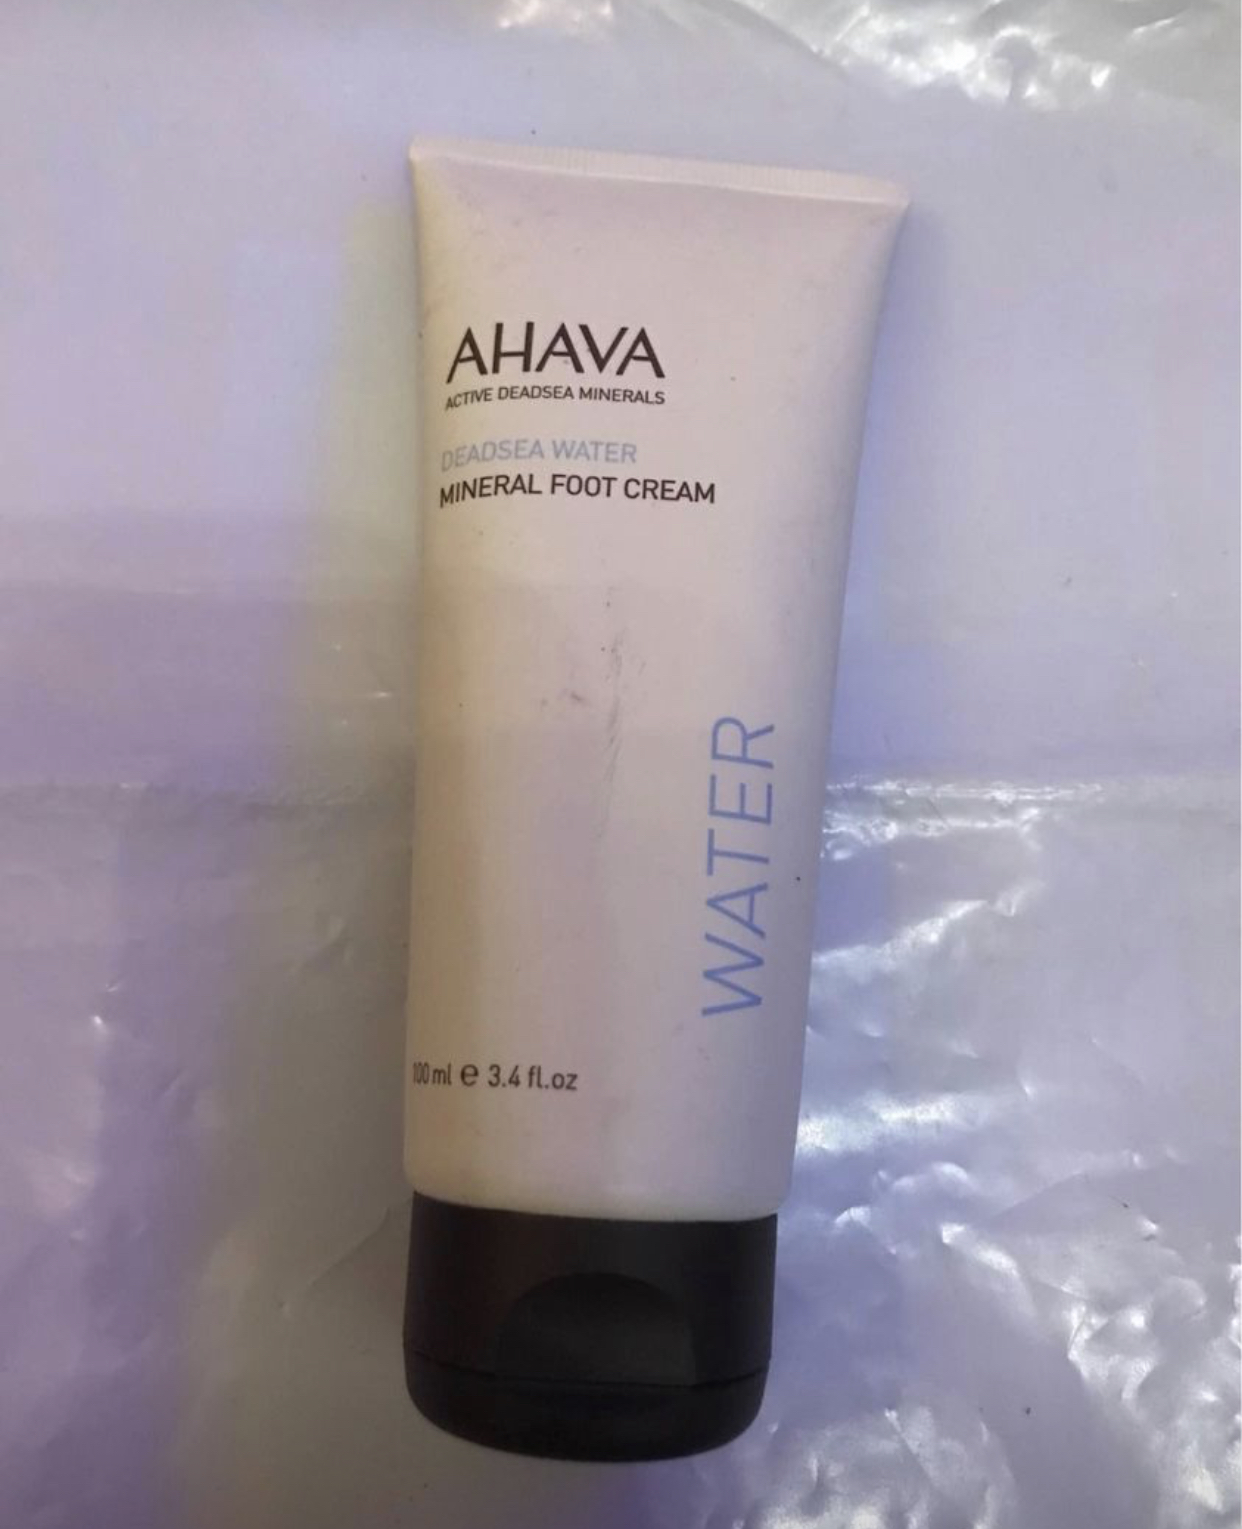 Ahava deadsea water mineral foot cream